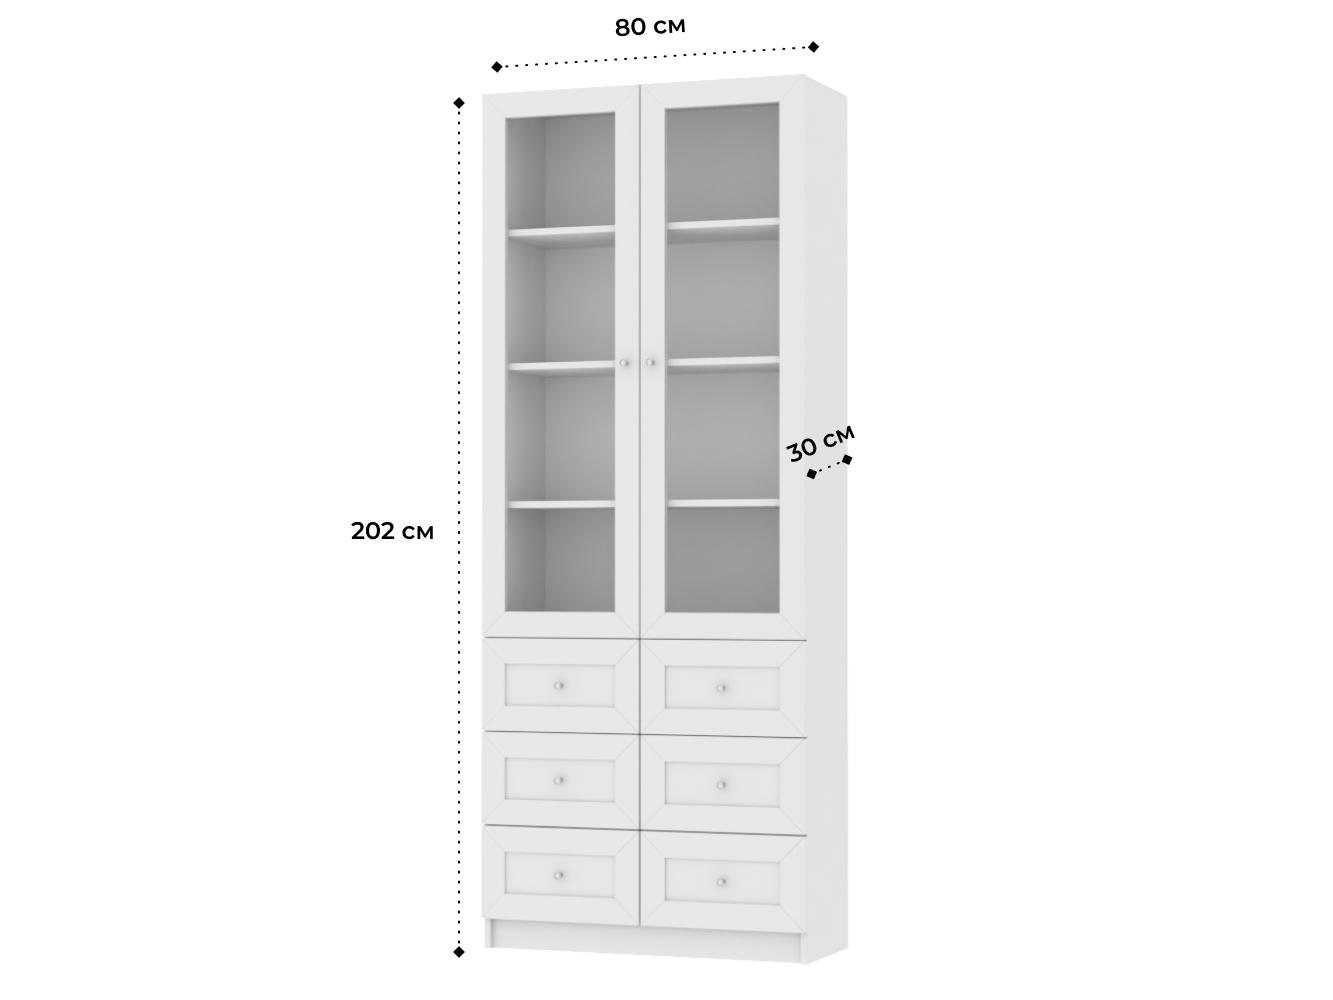 Книжный шкаф Билли 317 white ИКЕА (IKEA) изображение товара